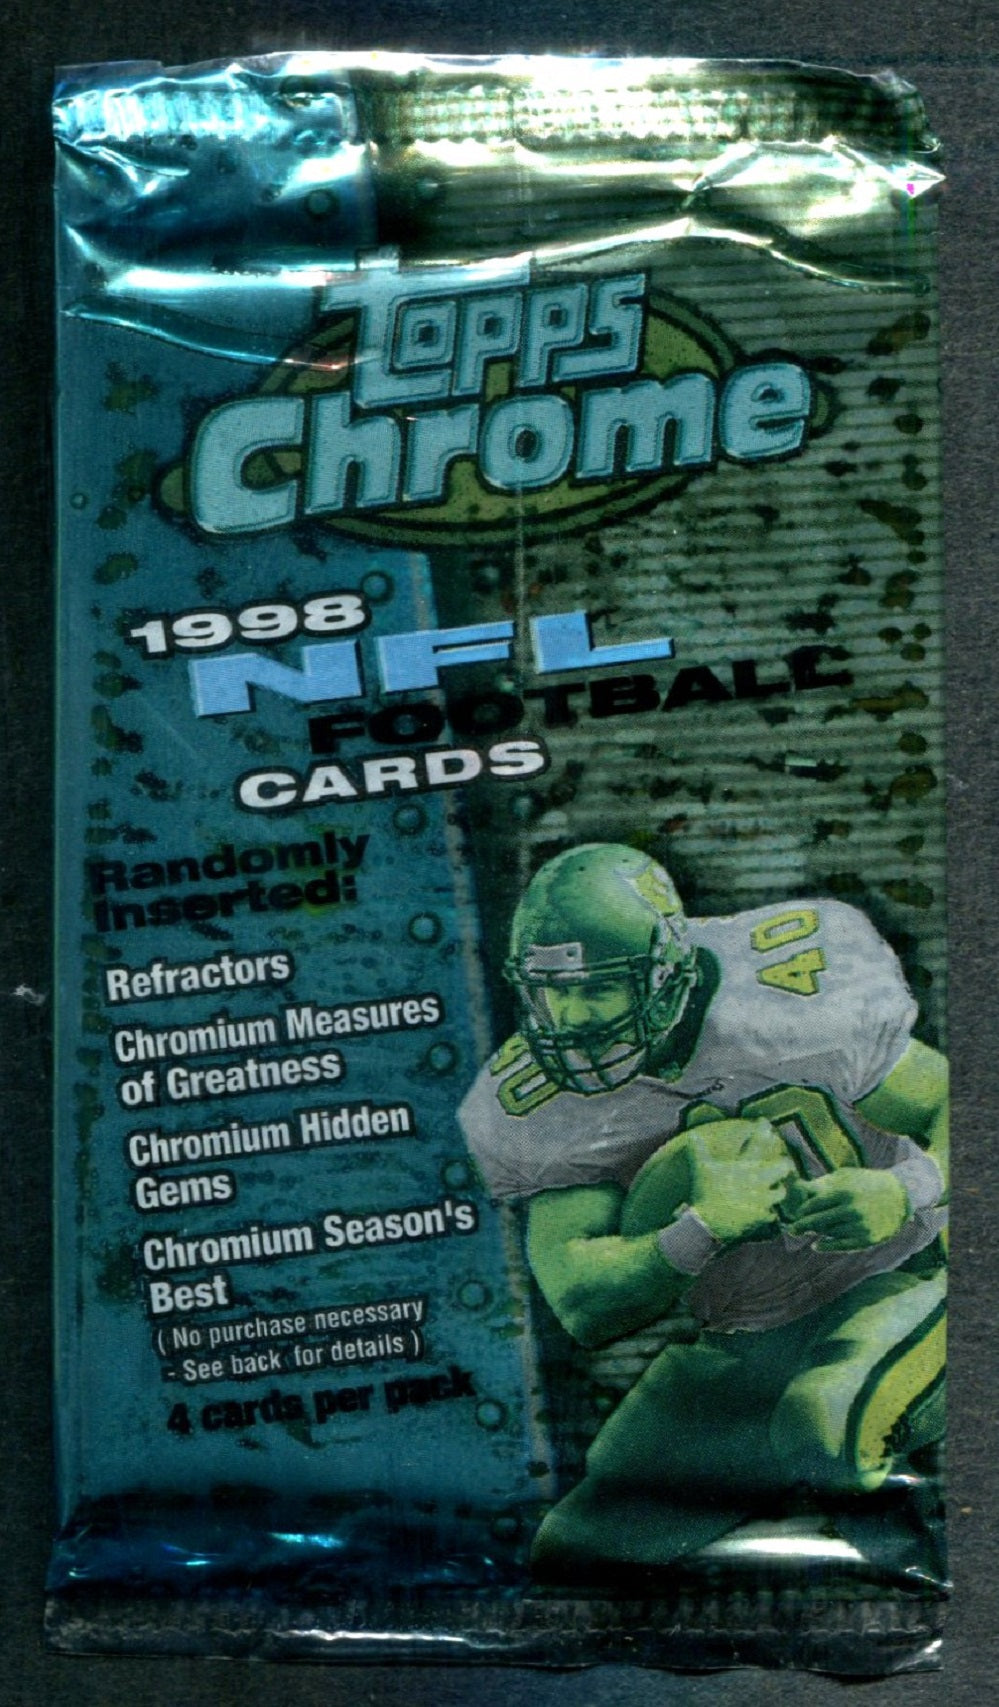 1998 Topps Chrome Football Unopened Pack (Retail)